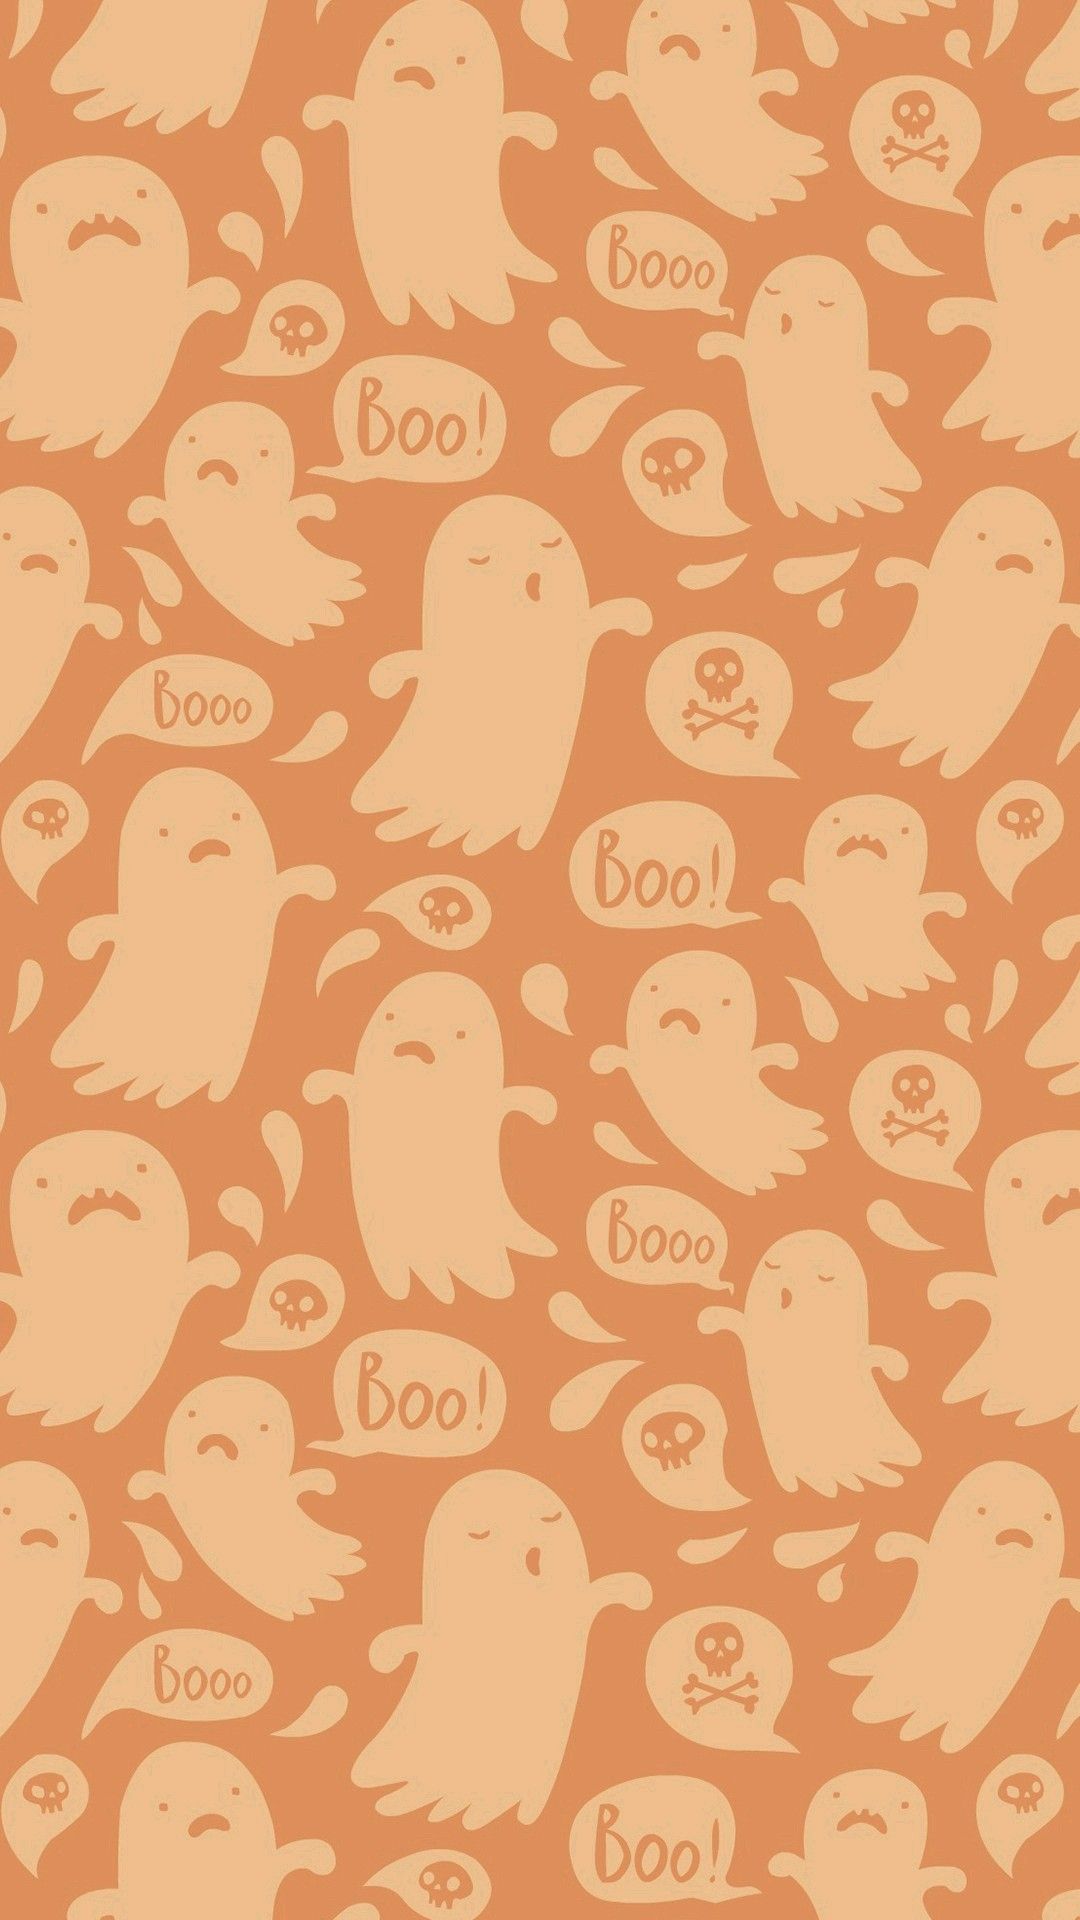 Wallpaper SBM Halloween. Halloween wallpaper iphone, Fall wallpaper, Free halloween wallpaper